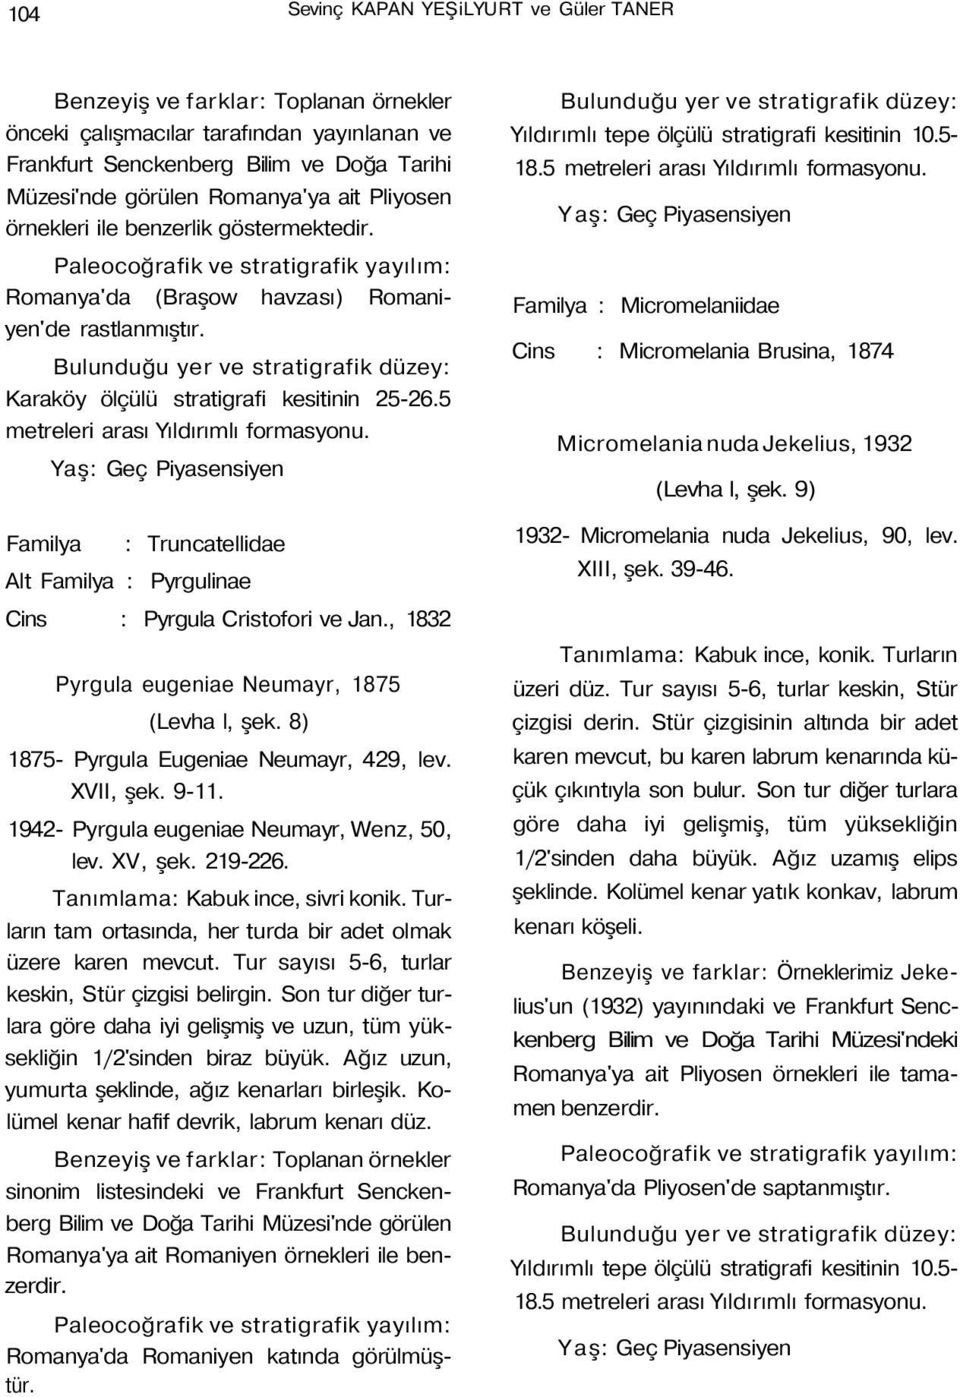 Familya : Truncatellidae Alt Familya : Pyrgulinae Cins : Pyrgula Cristofori ve Jan., 1832 Pyrgula eugeniae Neumayr, 1875 (Levha l, şek. 8) 1875- Pyrgula Eugeniae Neumayr, 429, lev. XVII, şek. 9-11.